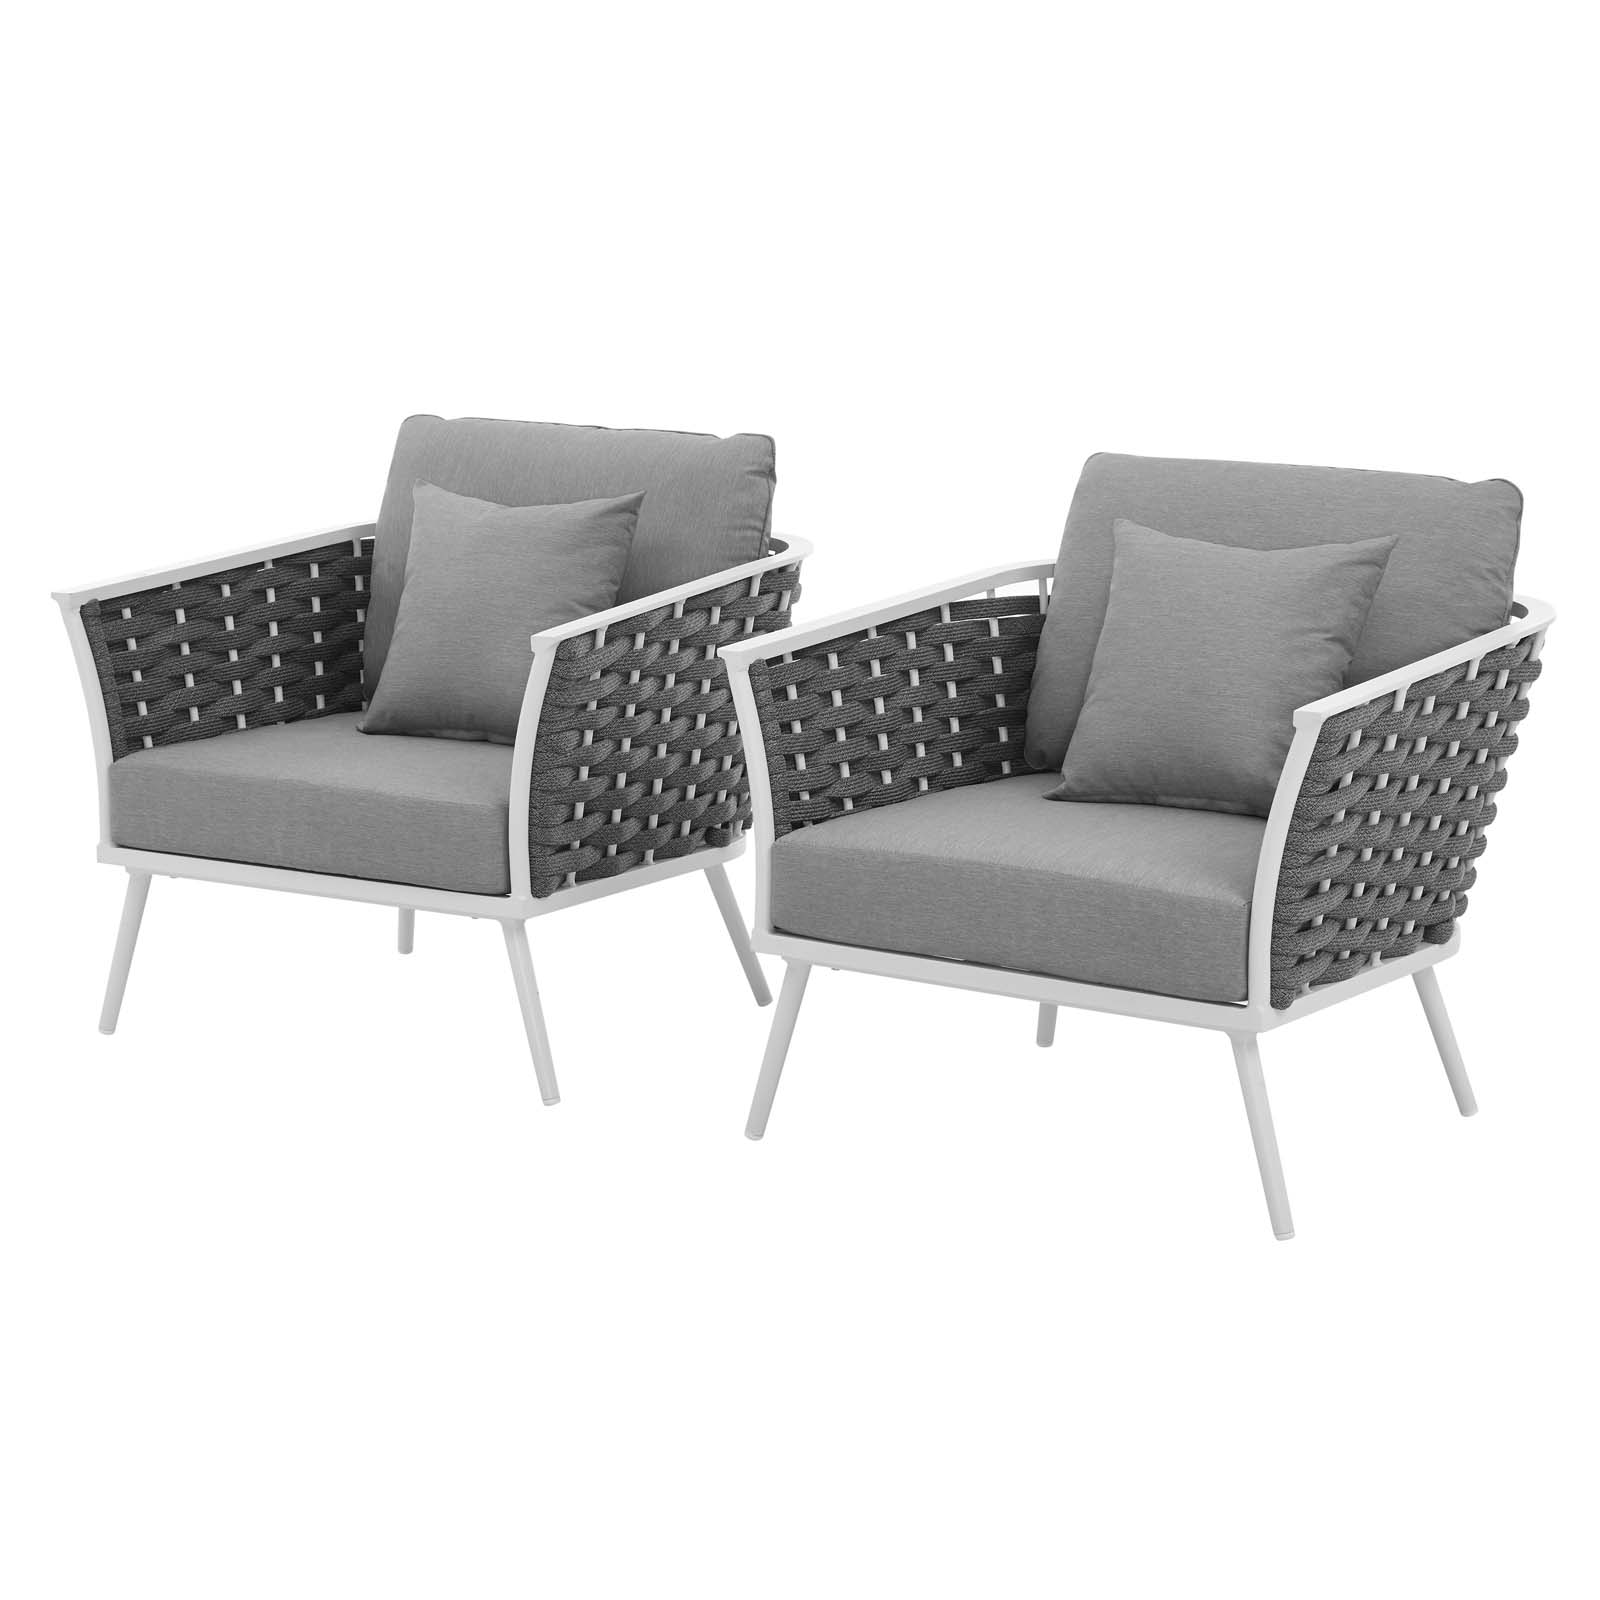 Modern Contemporary Urban Outdoor Patio Balcony Garden Furniture Lounge Chair Armchair, Set of Two, Fabric Aluminium, White Grey Gray - image 1 of 6